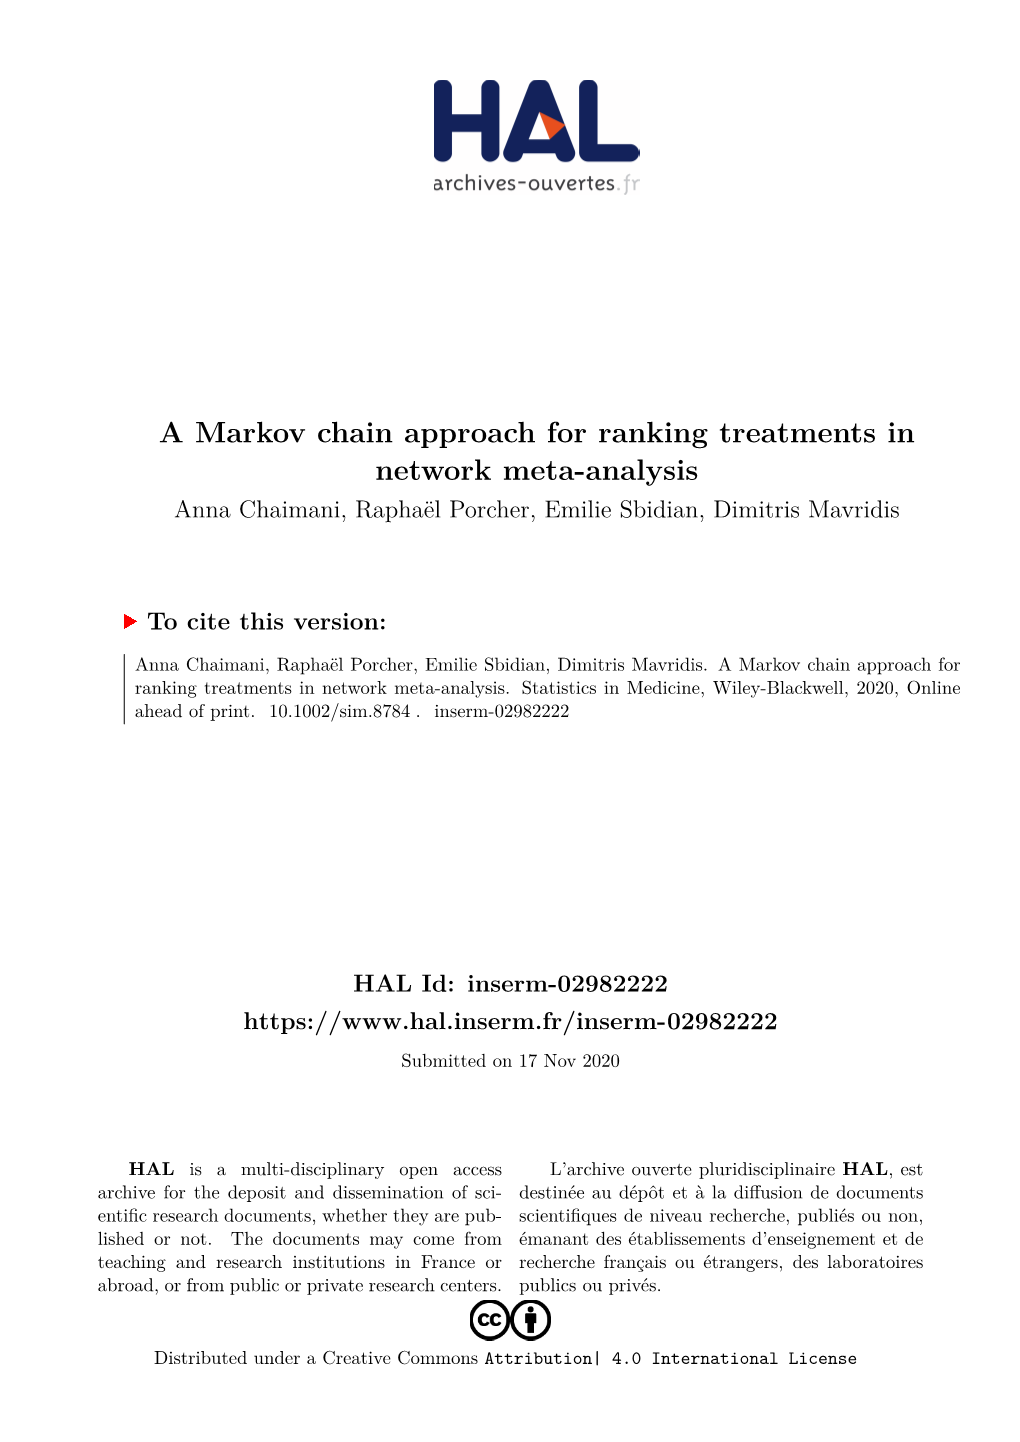 A Markov Chain Approach for Ranking Treatments in Network Meta-Analysis Anna Chaimani, Raphaël Porcher, Emilie Sbidian, Dimitris Mavridis